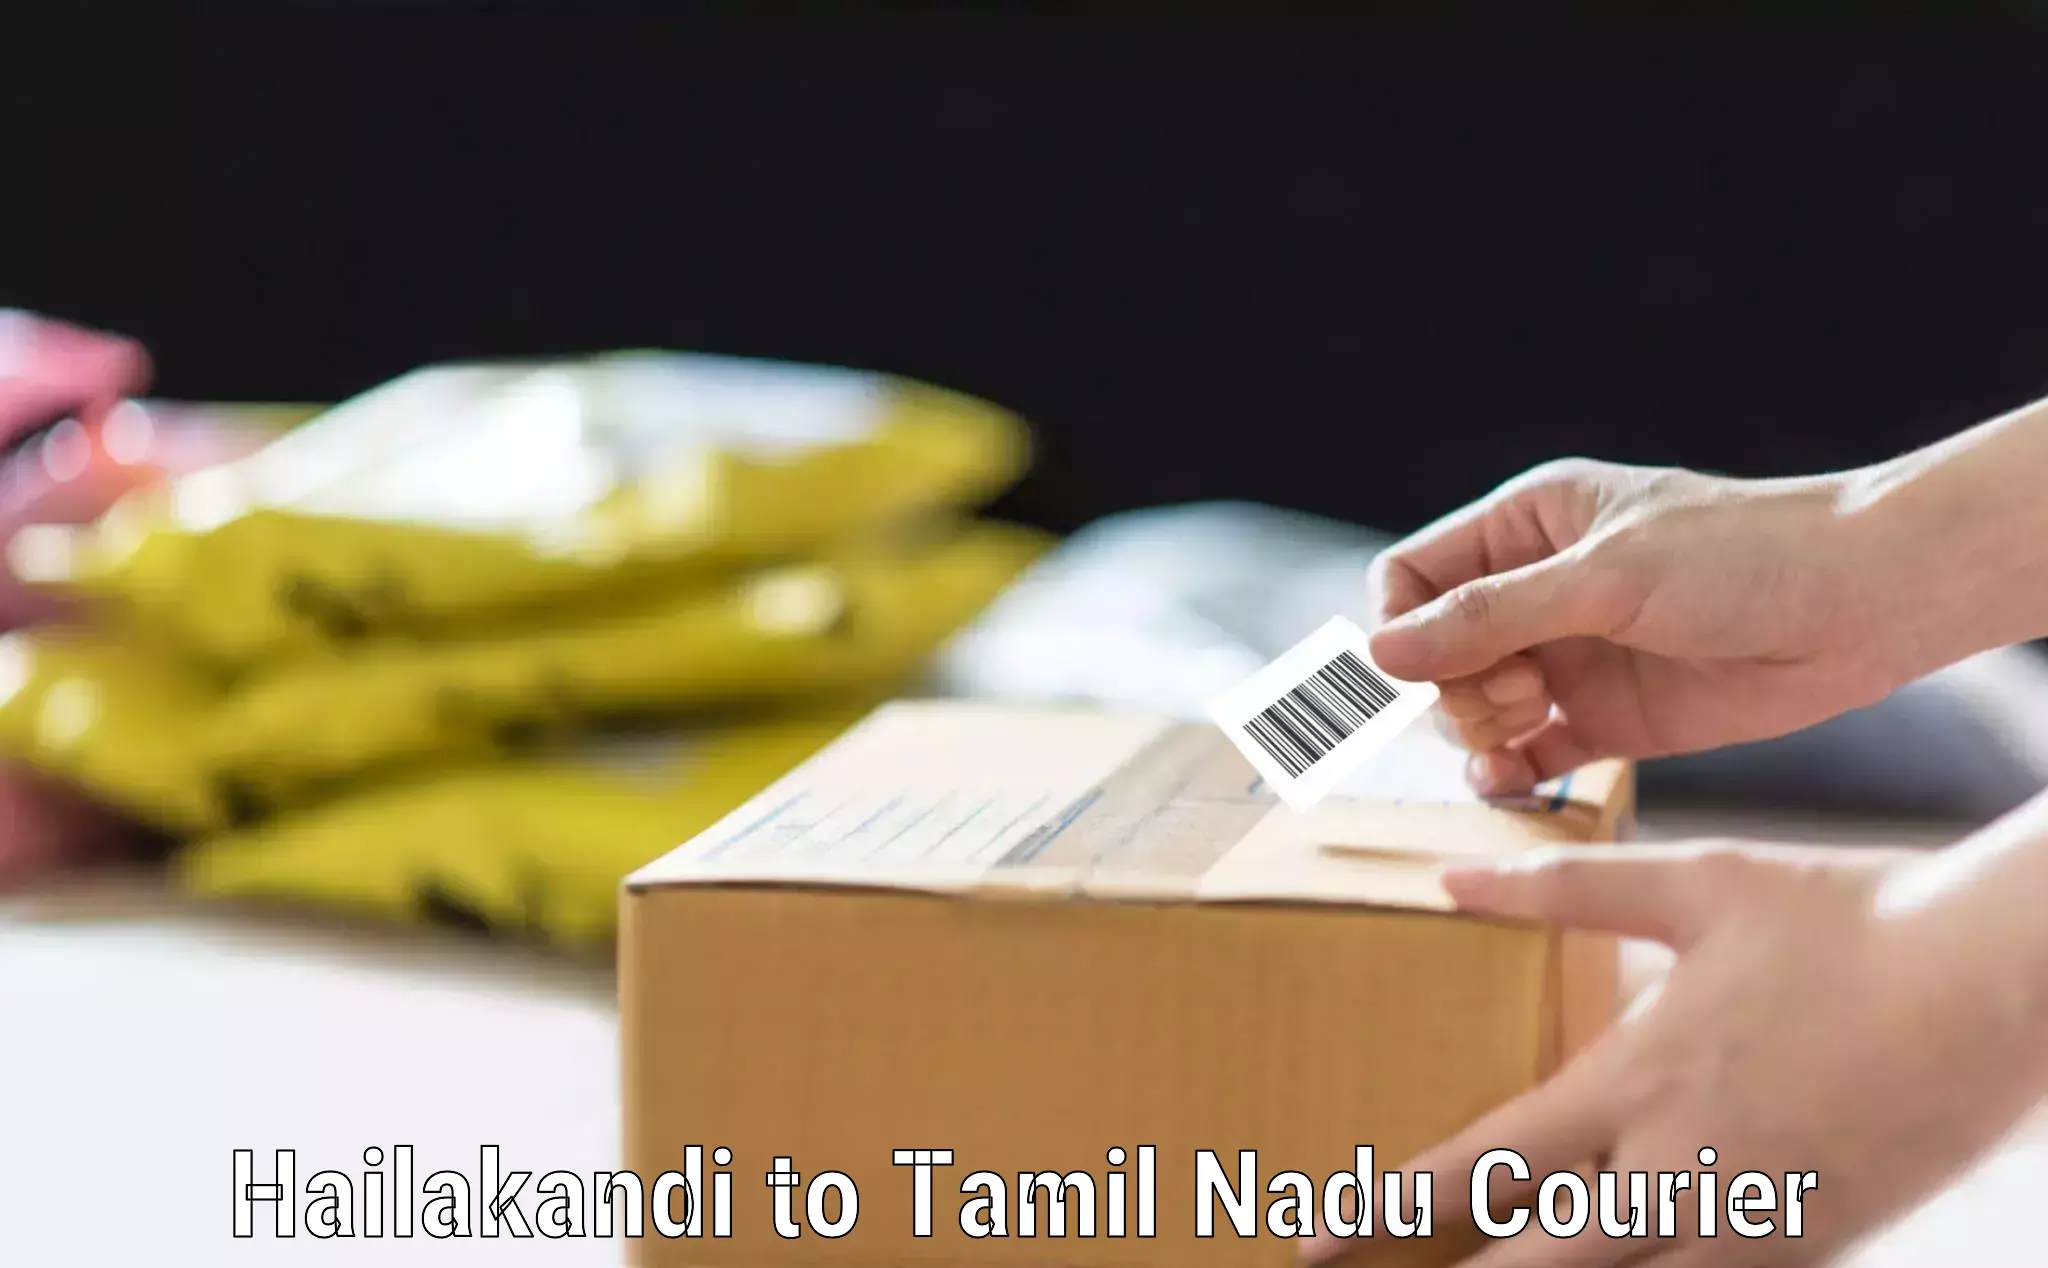 Emergency baggage service Hailakandi to Tamil Nadu